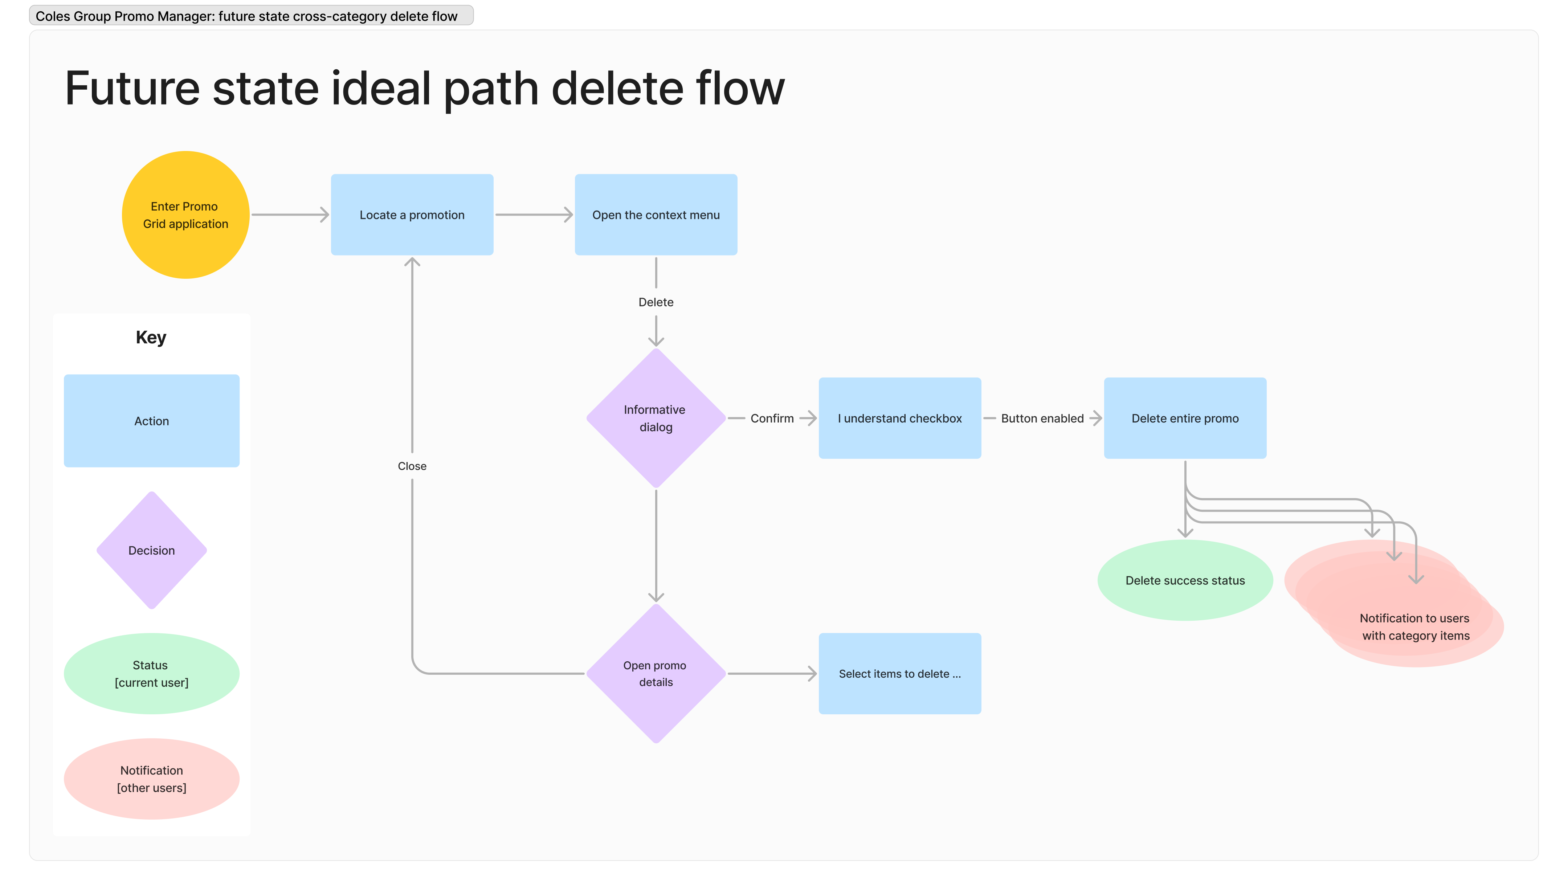 Delete flow in a complex multiuser application